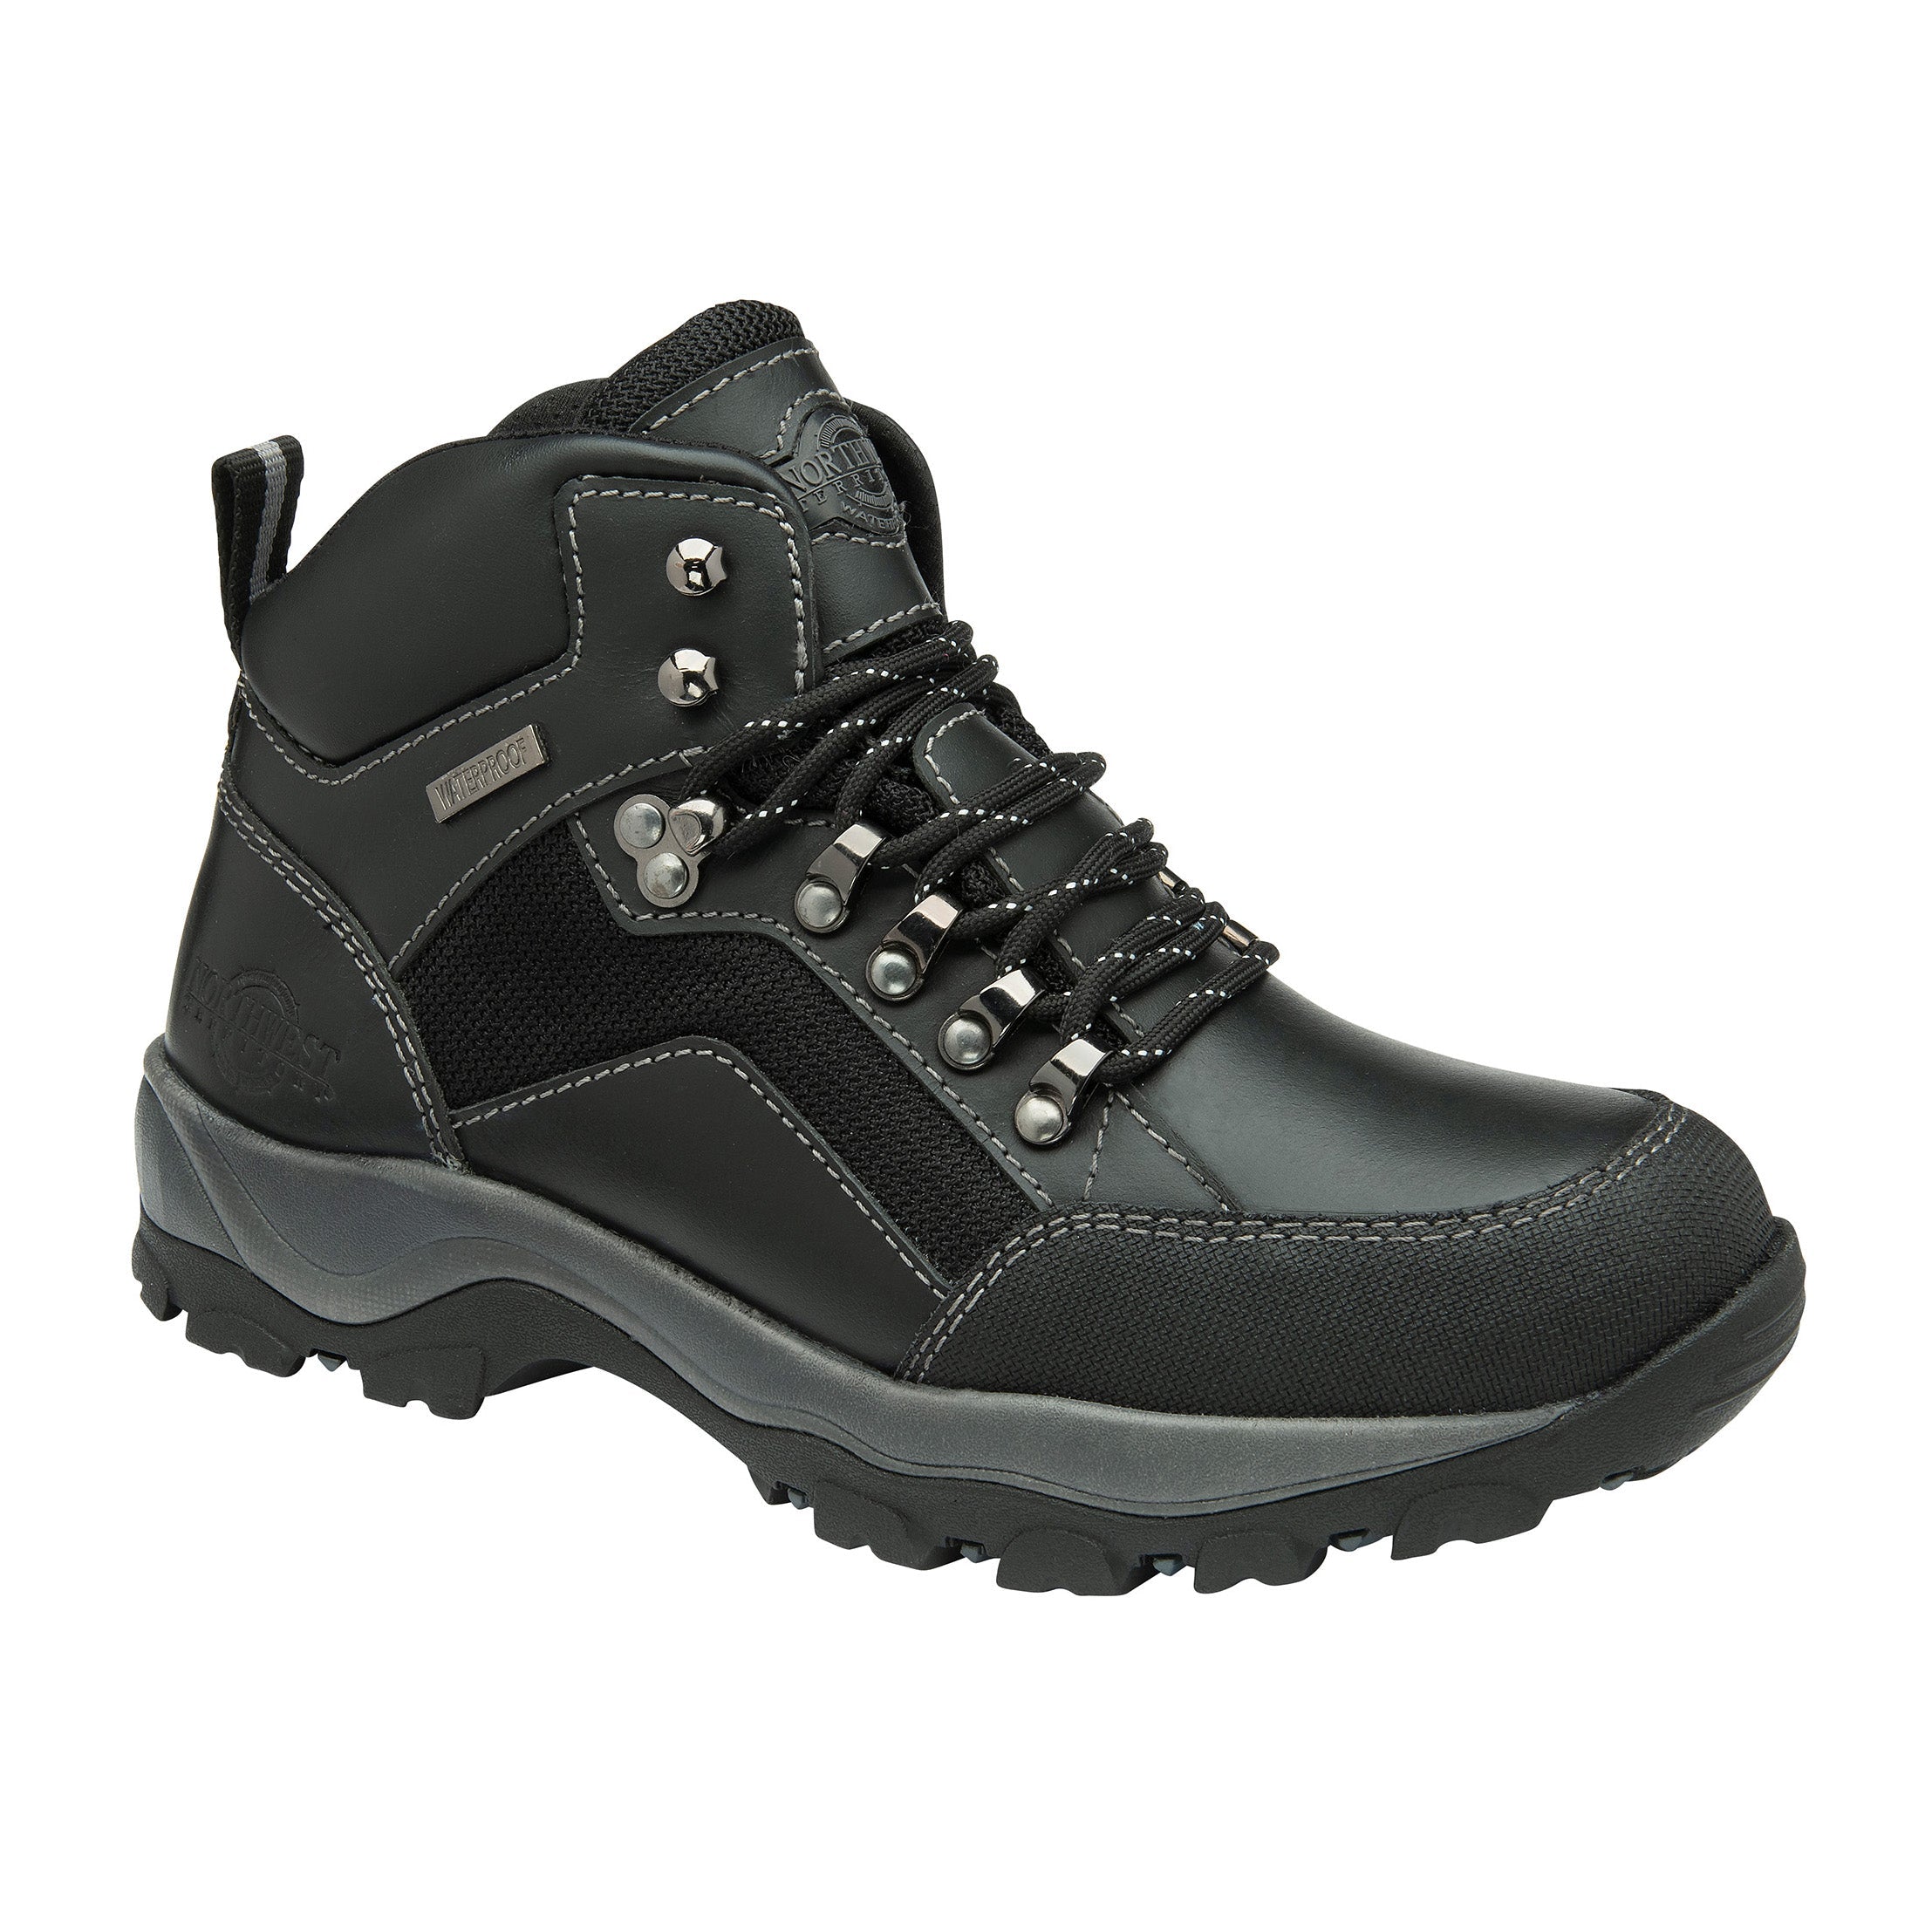 Yukon Leather Waterproof Walking And Hiking Boots